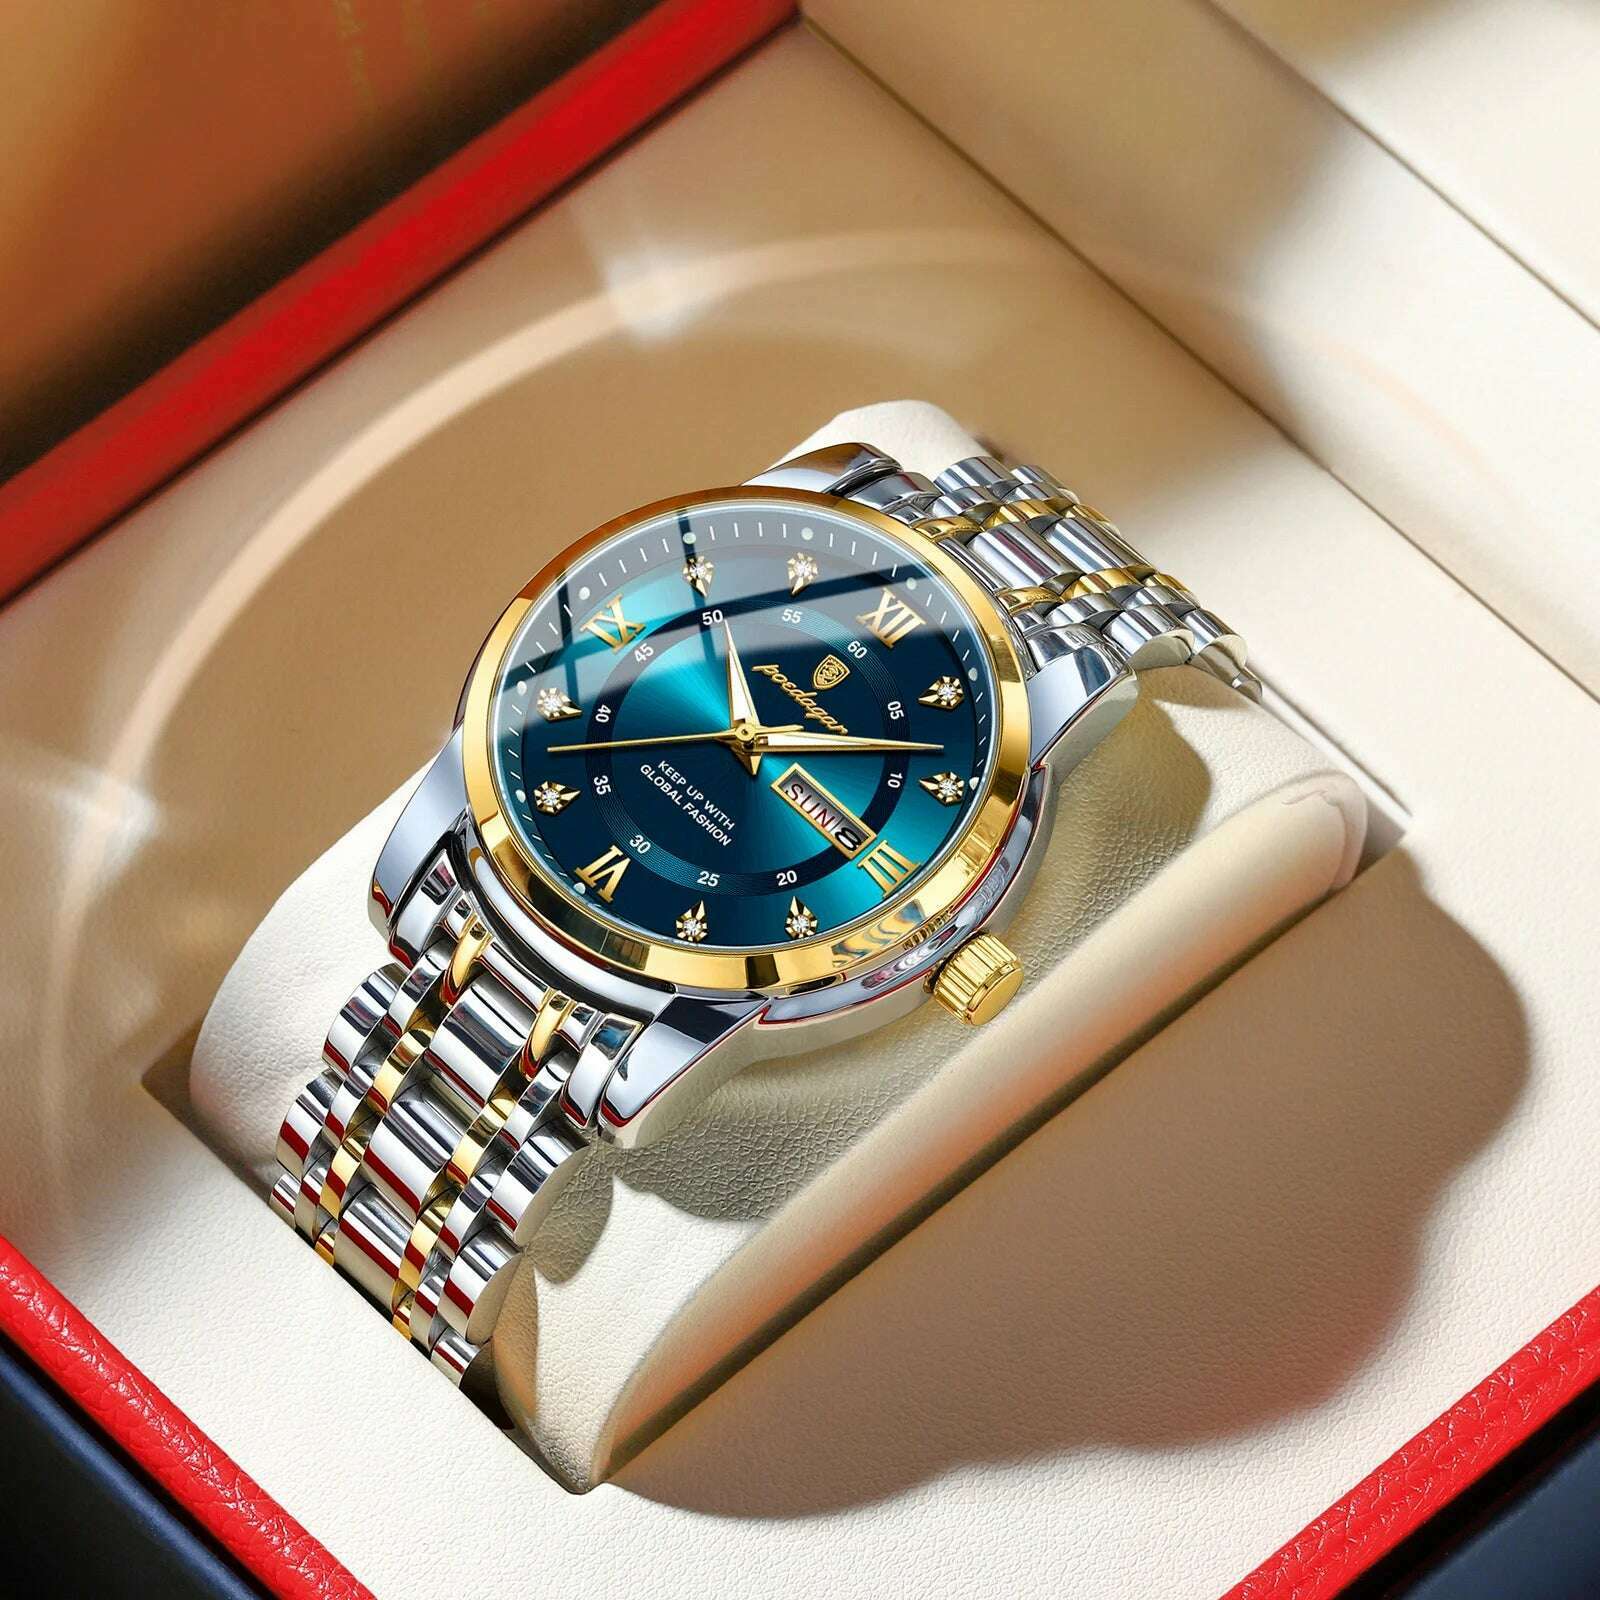 KIMLUD, POEDAGAR Luxury Watch for Man Elegant Date Week Waterproof Luminous Men Watch Quartz Stainless Steel Sports Men's Watches reloj, Gold Blue, KIMLUD Women's Clothes